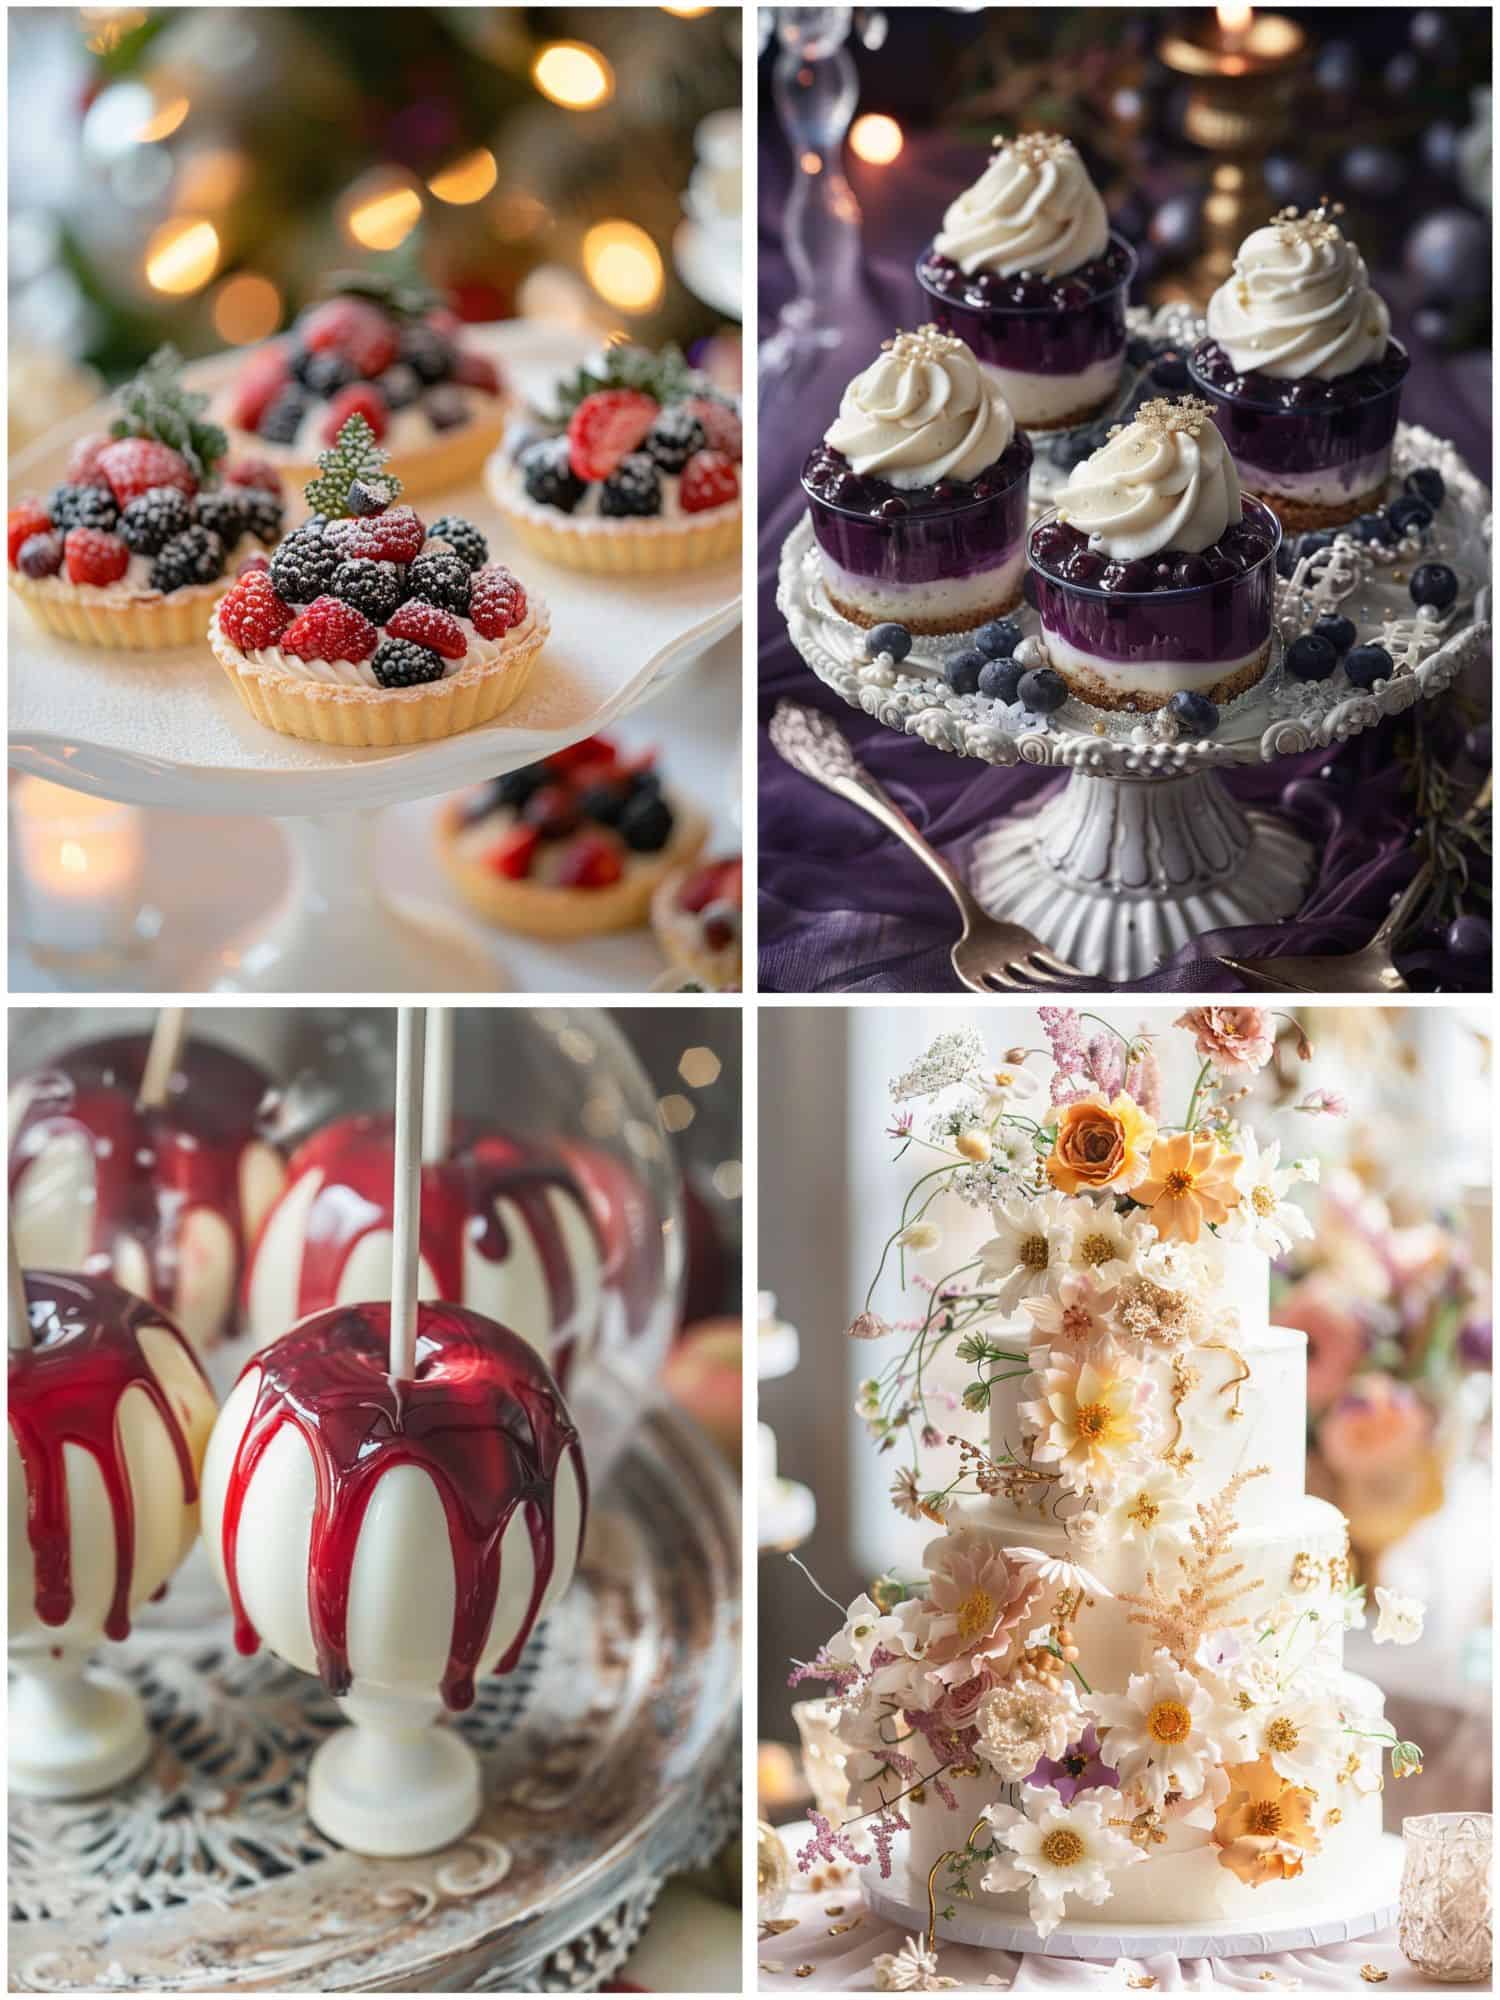 enchanting dessert options for a fairytale wedding